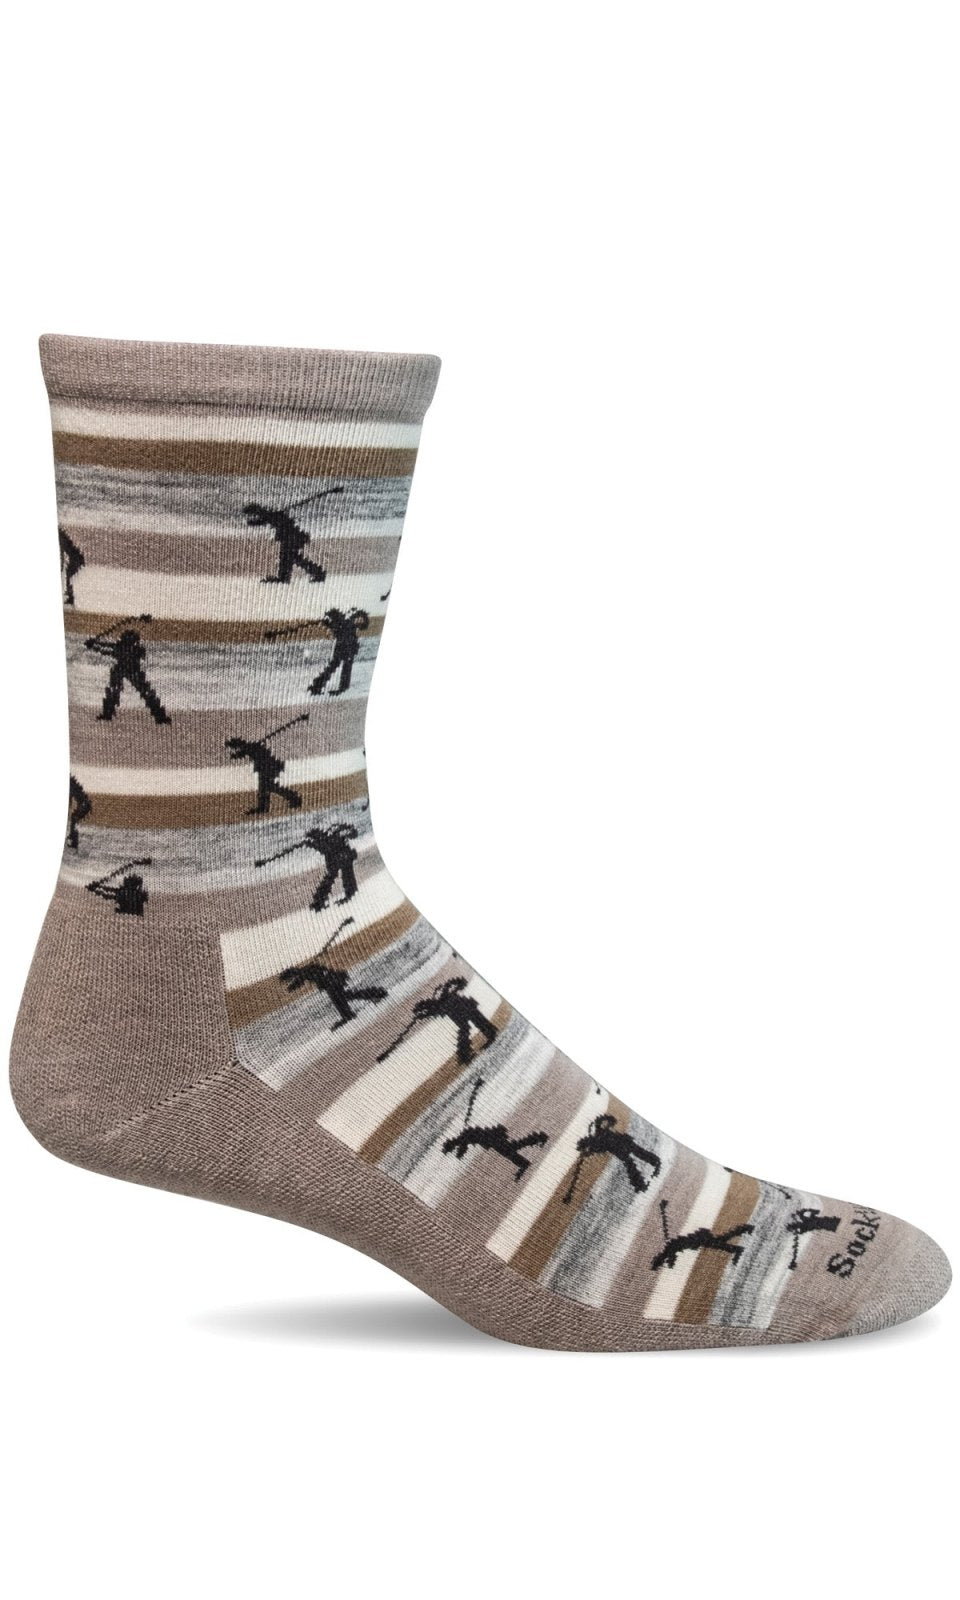 Men's Fairway | Essential Comfort Socks - Merino Wool Essential Comfort - Sockwell